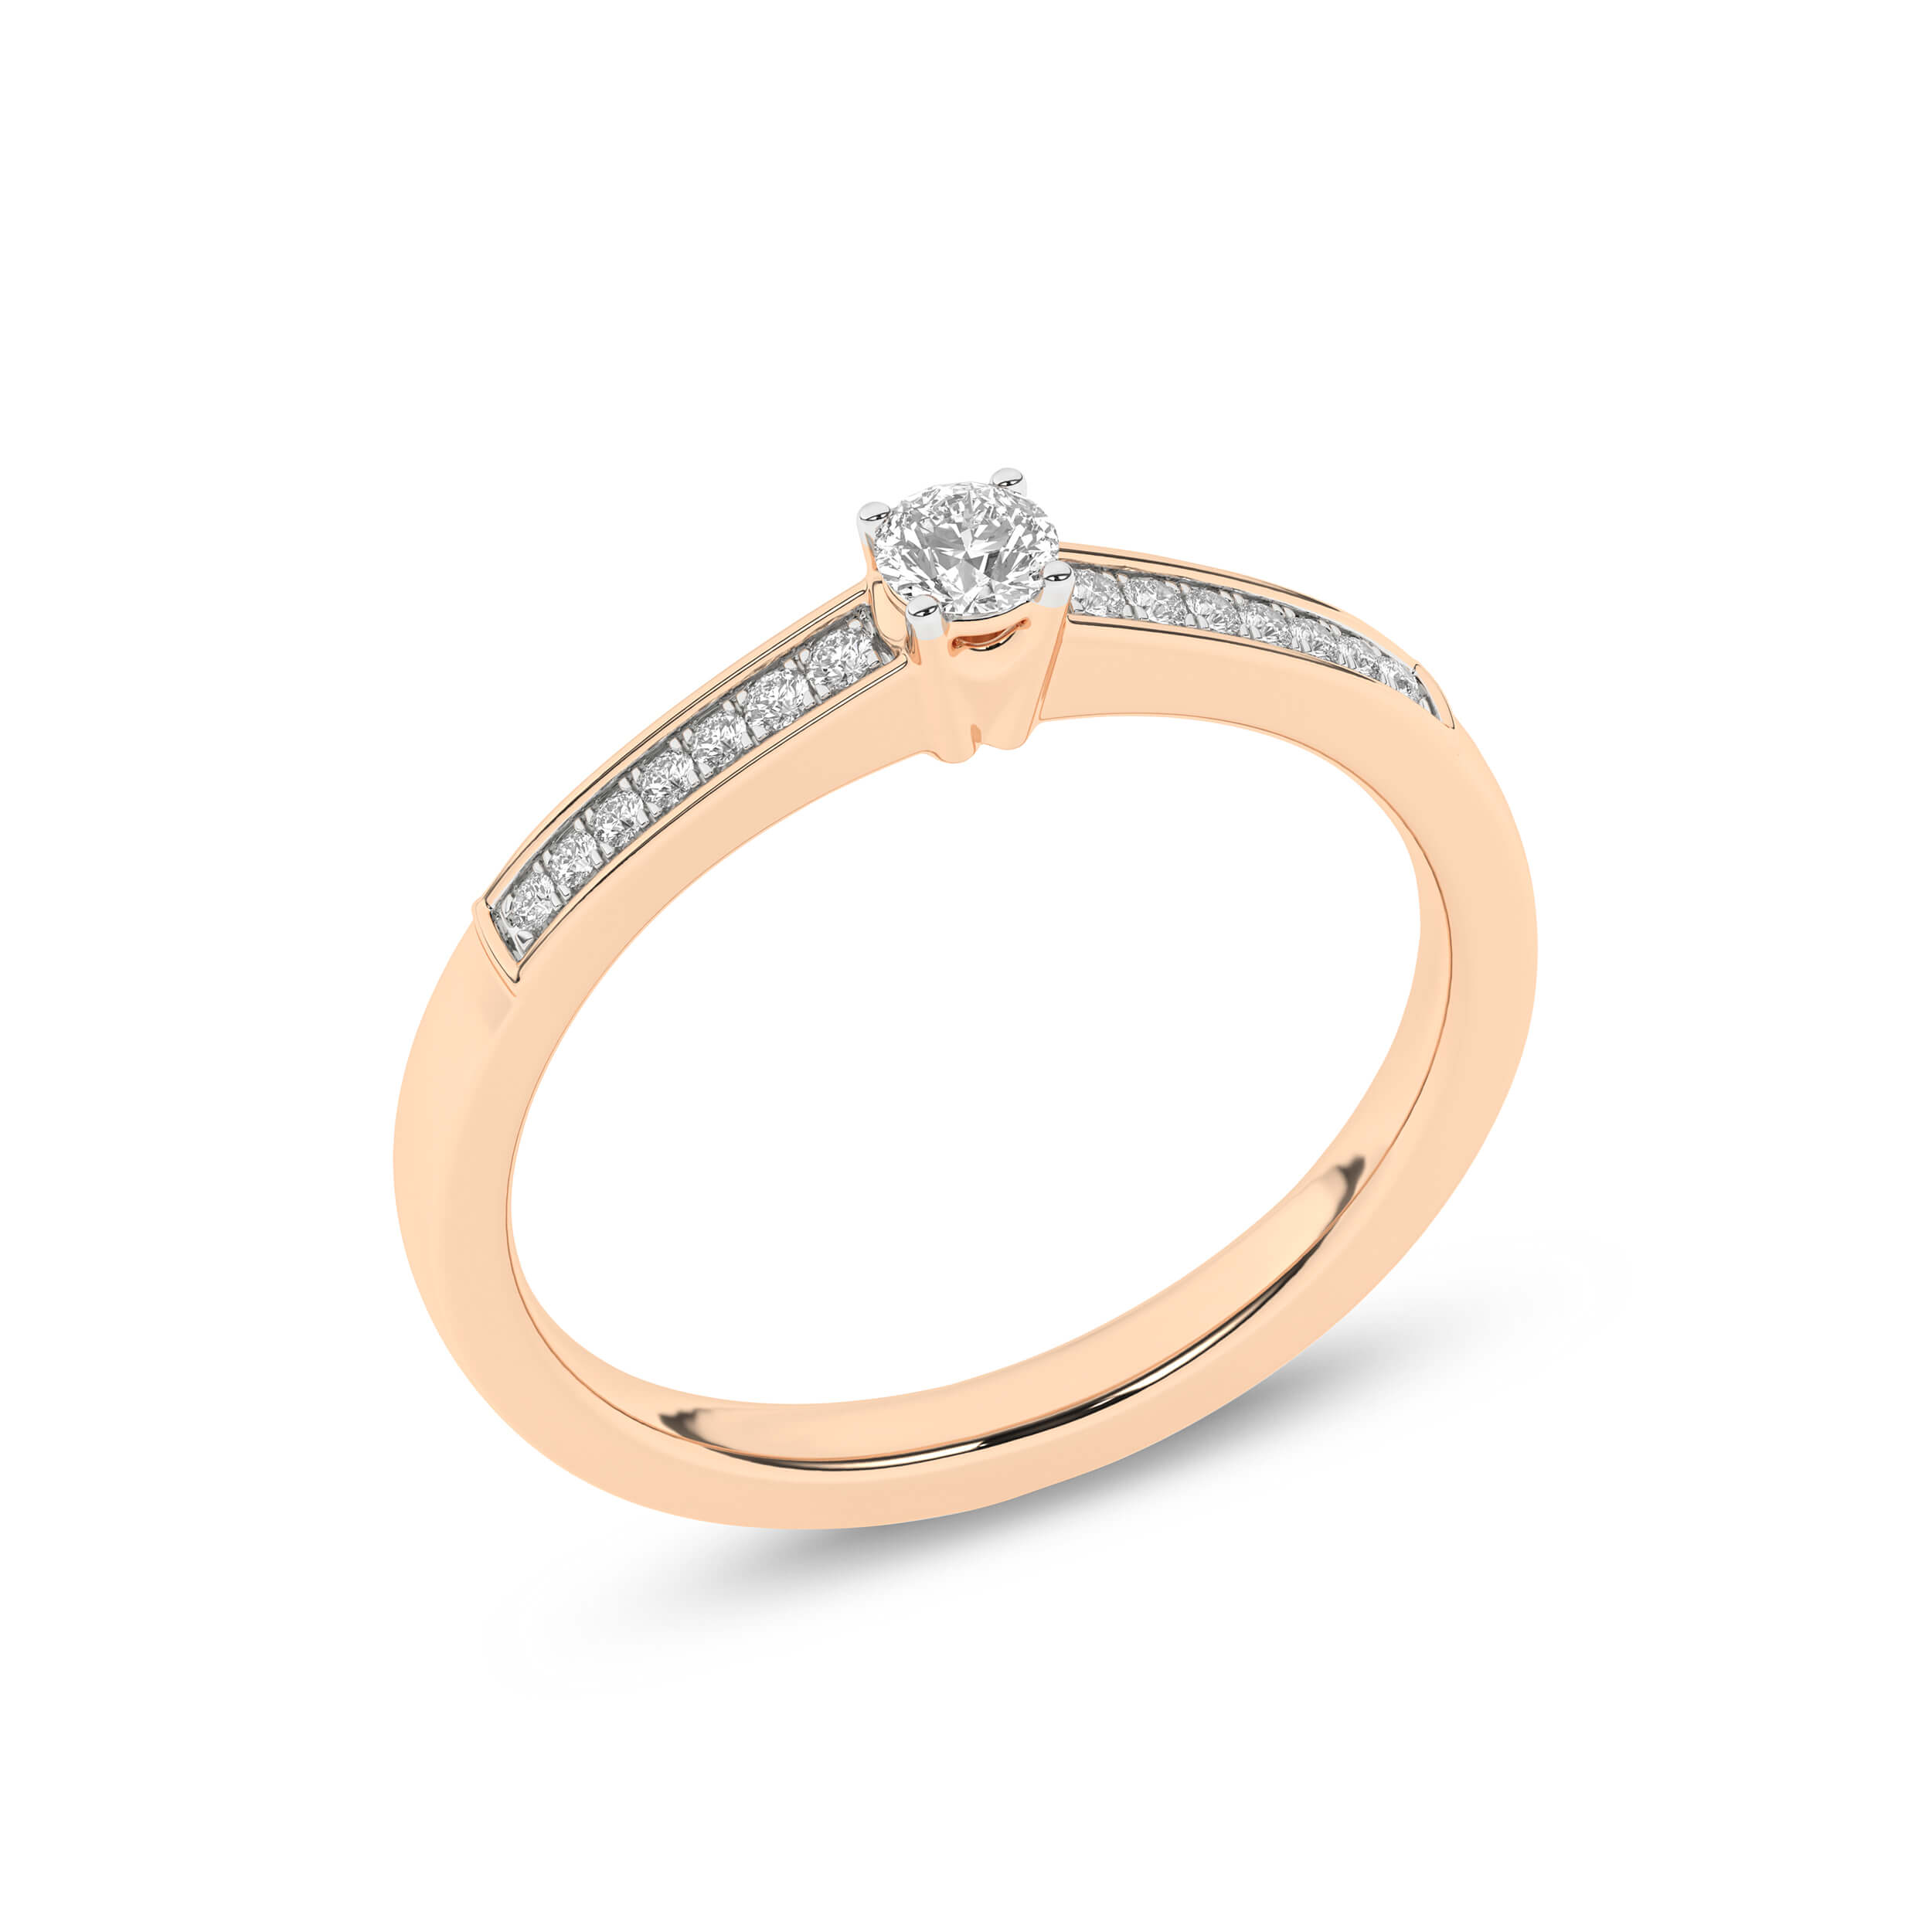 Inel de logodna din Aur Roz 14K cu Diamante 0.15Ct, articol RB17824EG, previzualizare foto 4